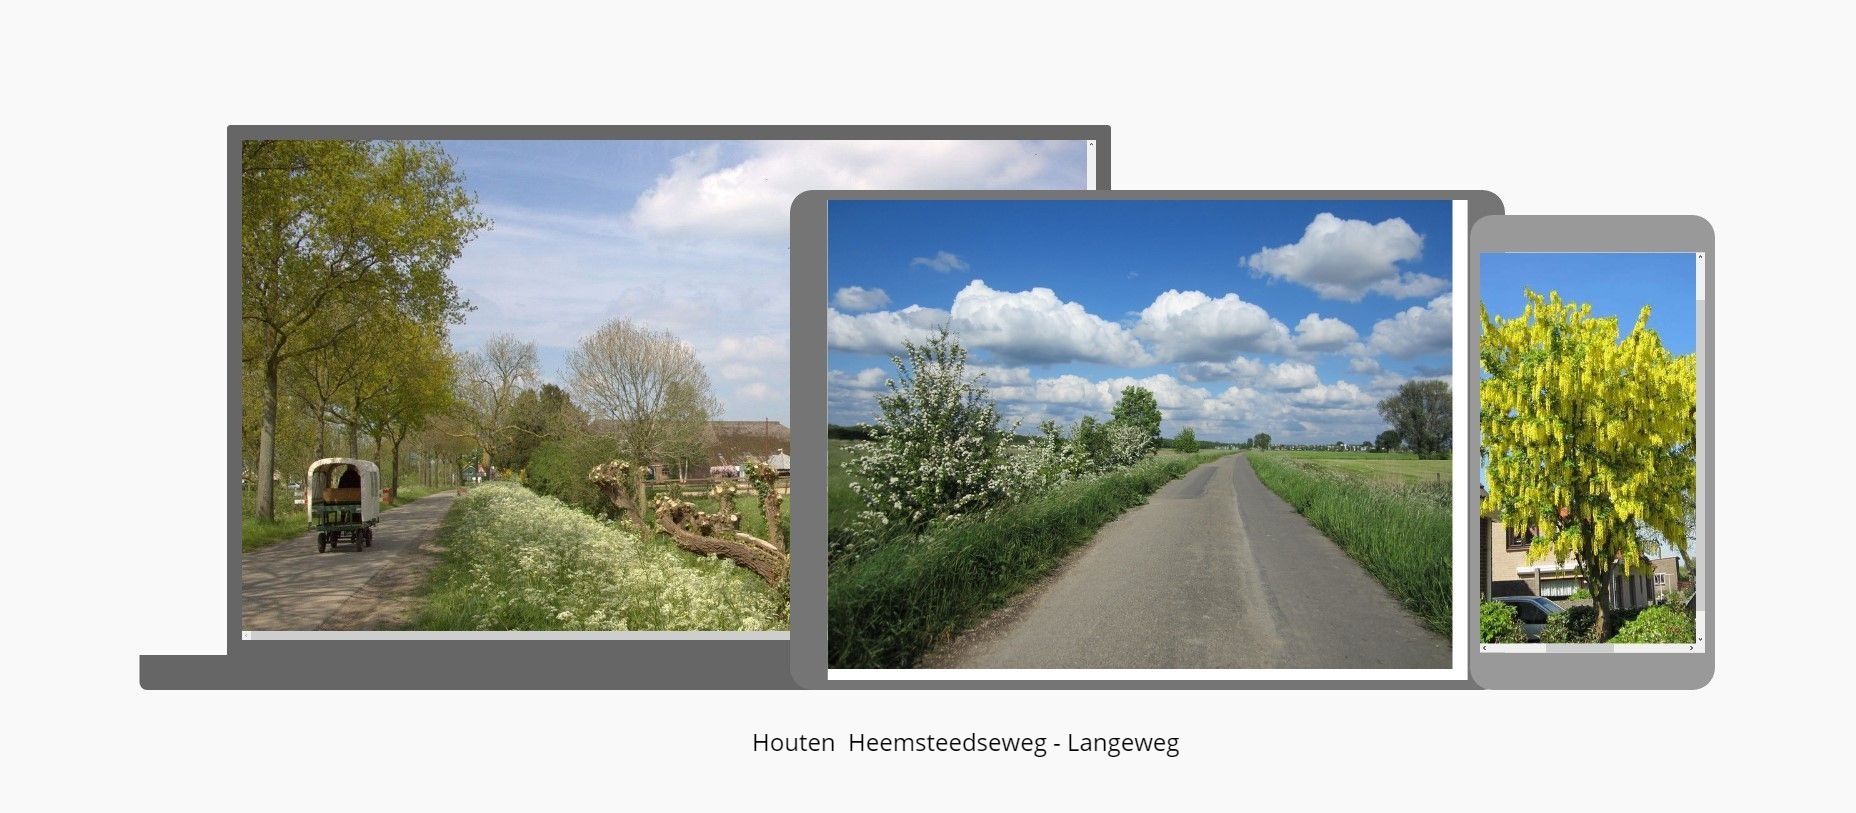 Heemsteedseweg - Langeweg - Golden rain tree